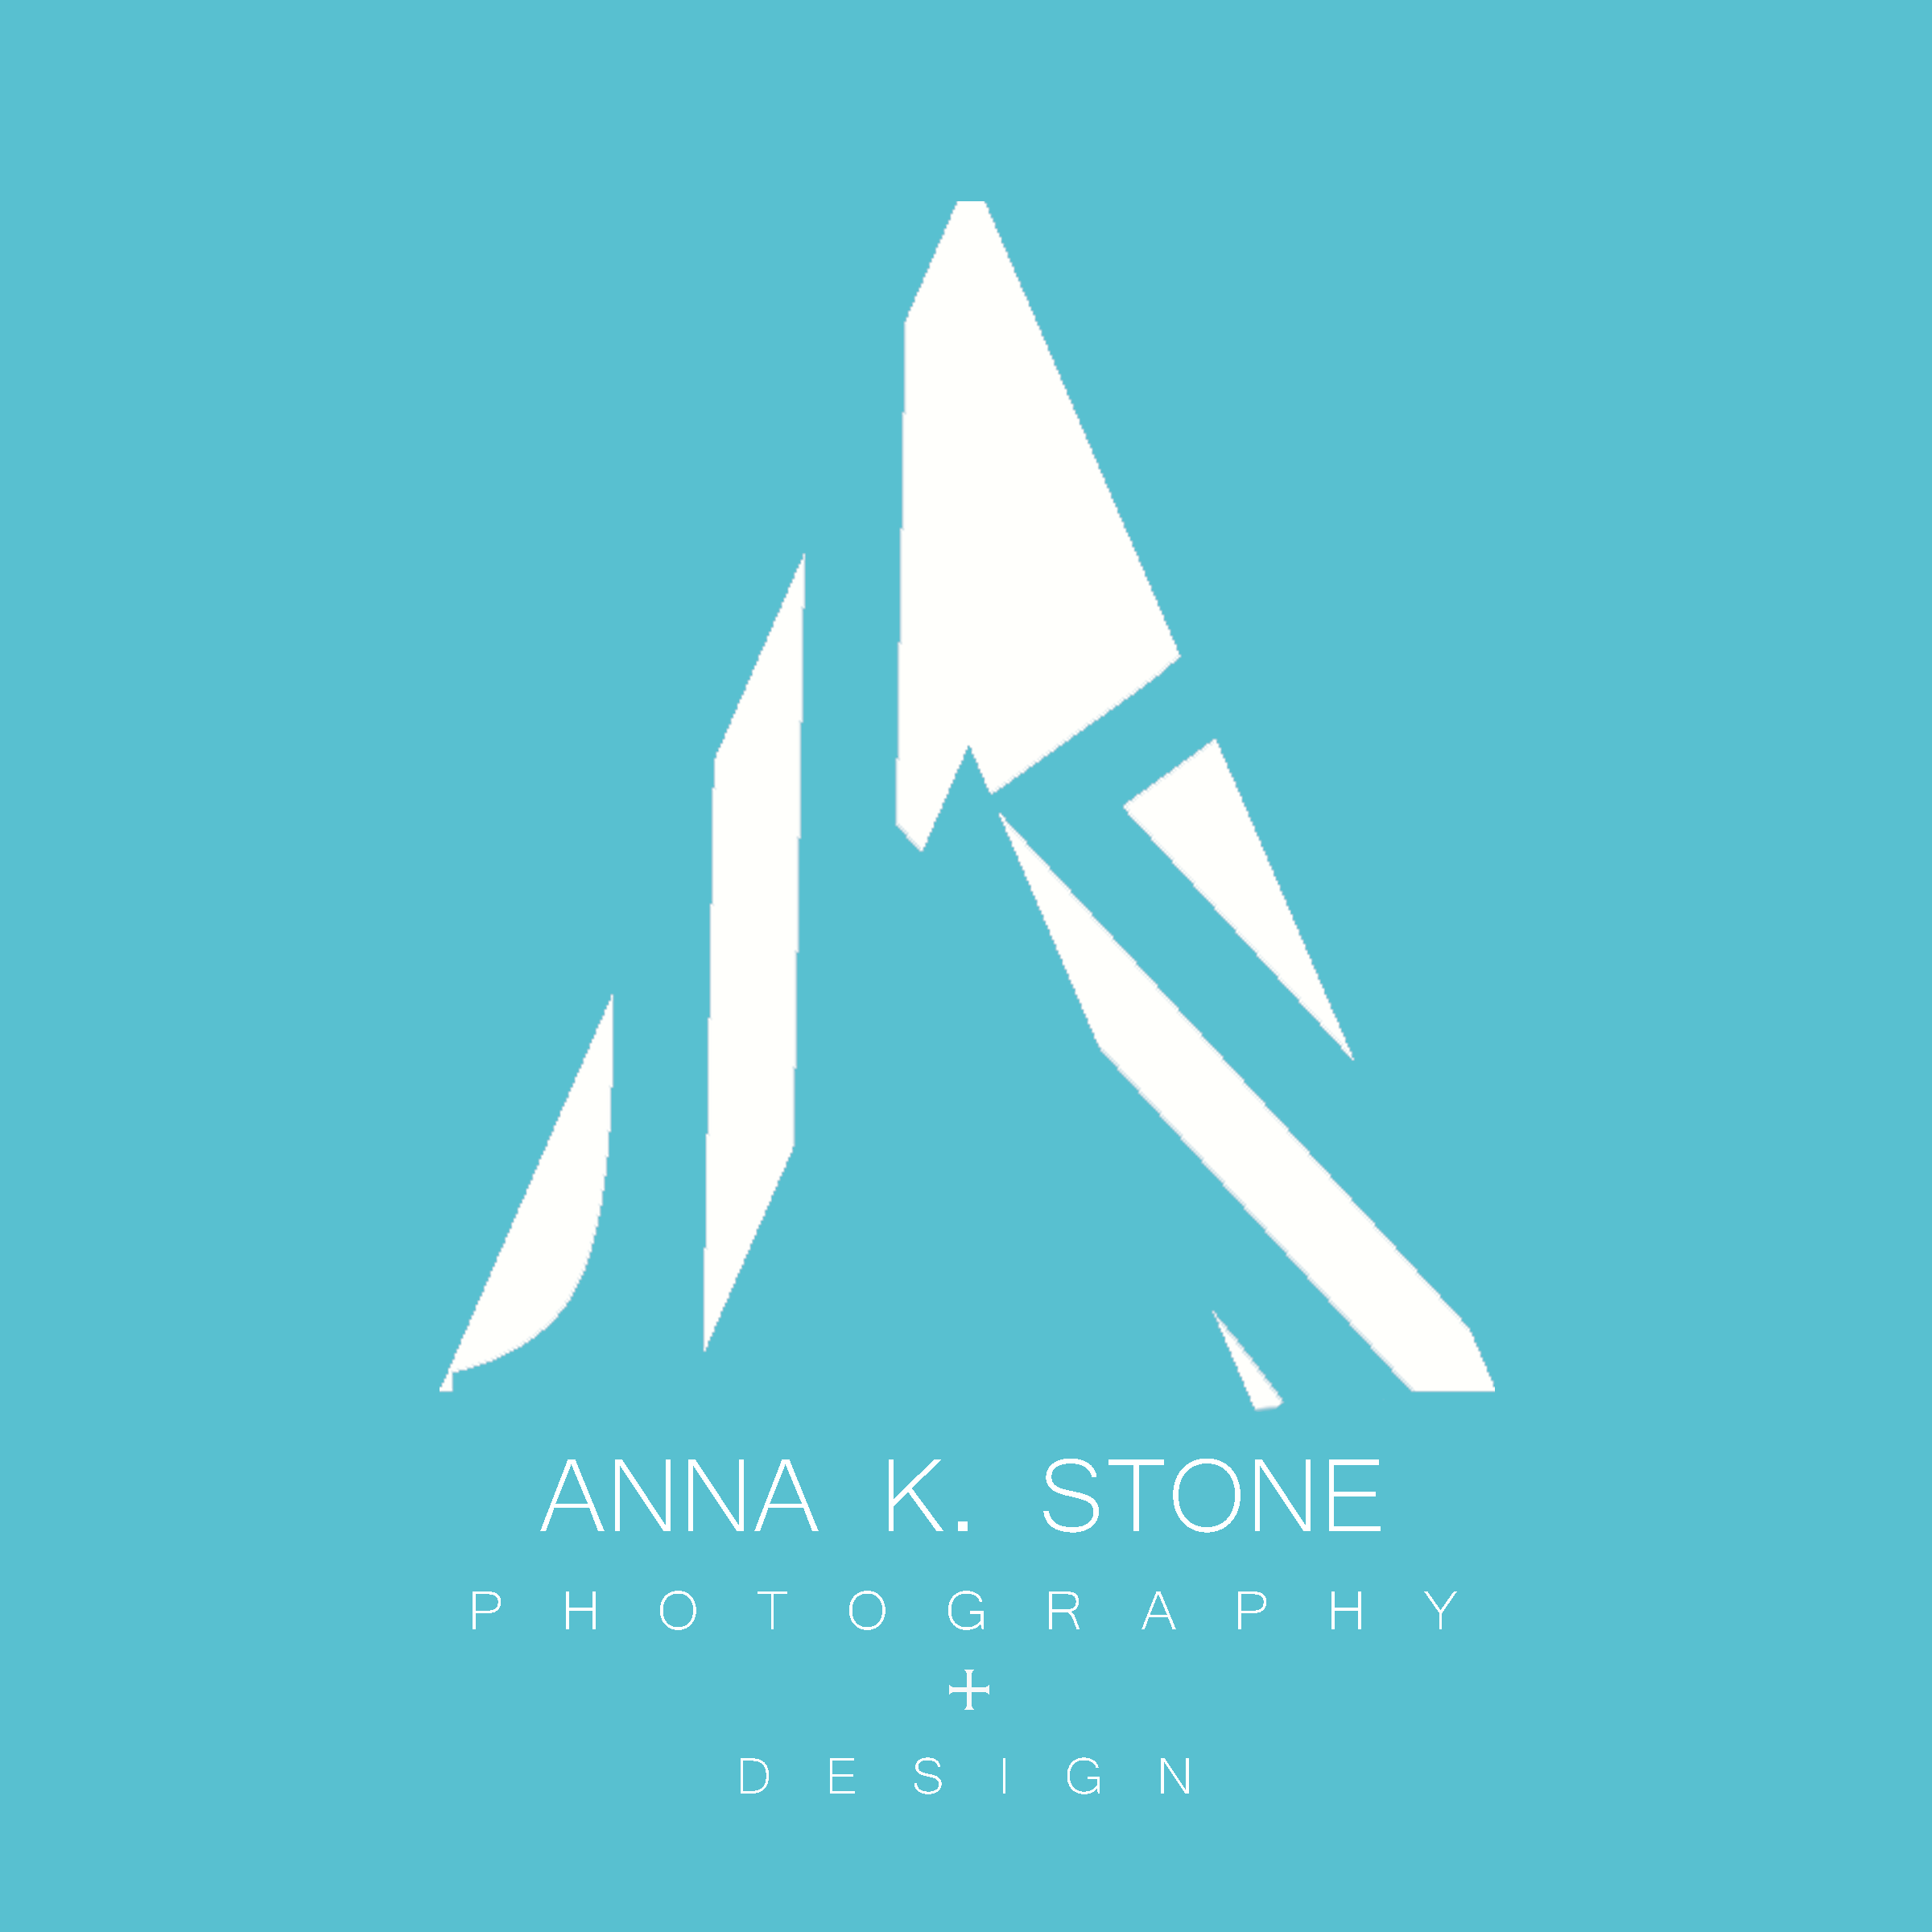 Anna K. Stone